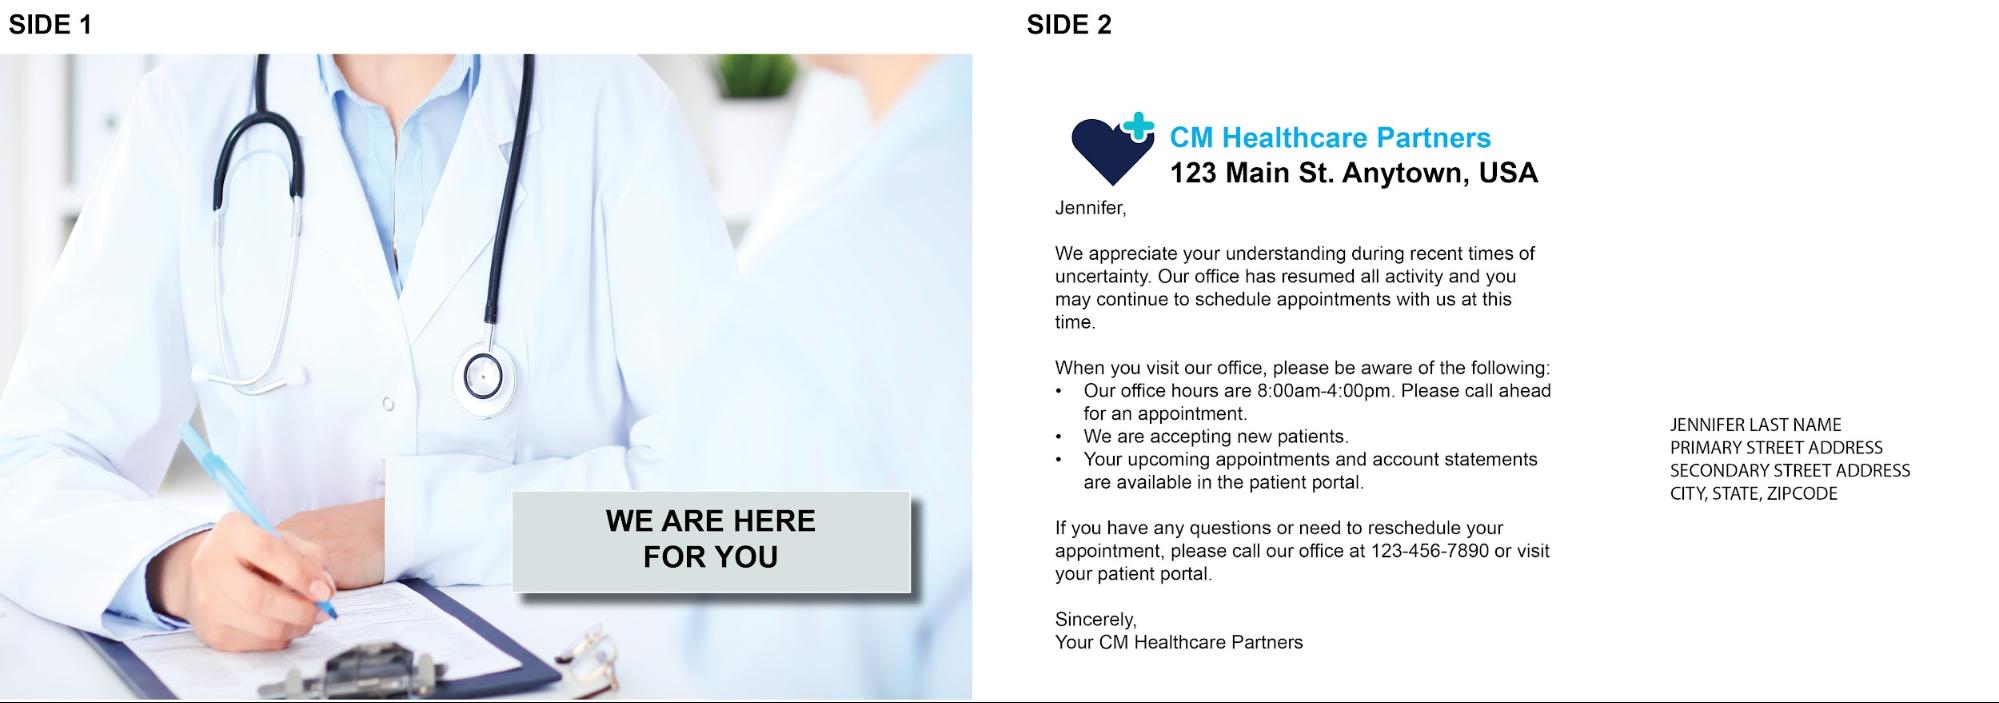 healthcare marketing template 2